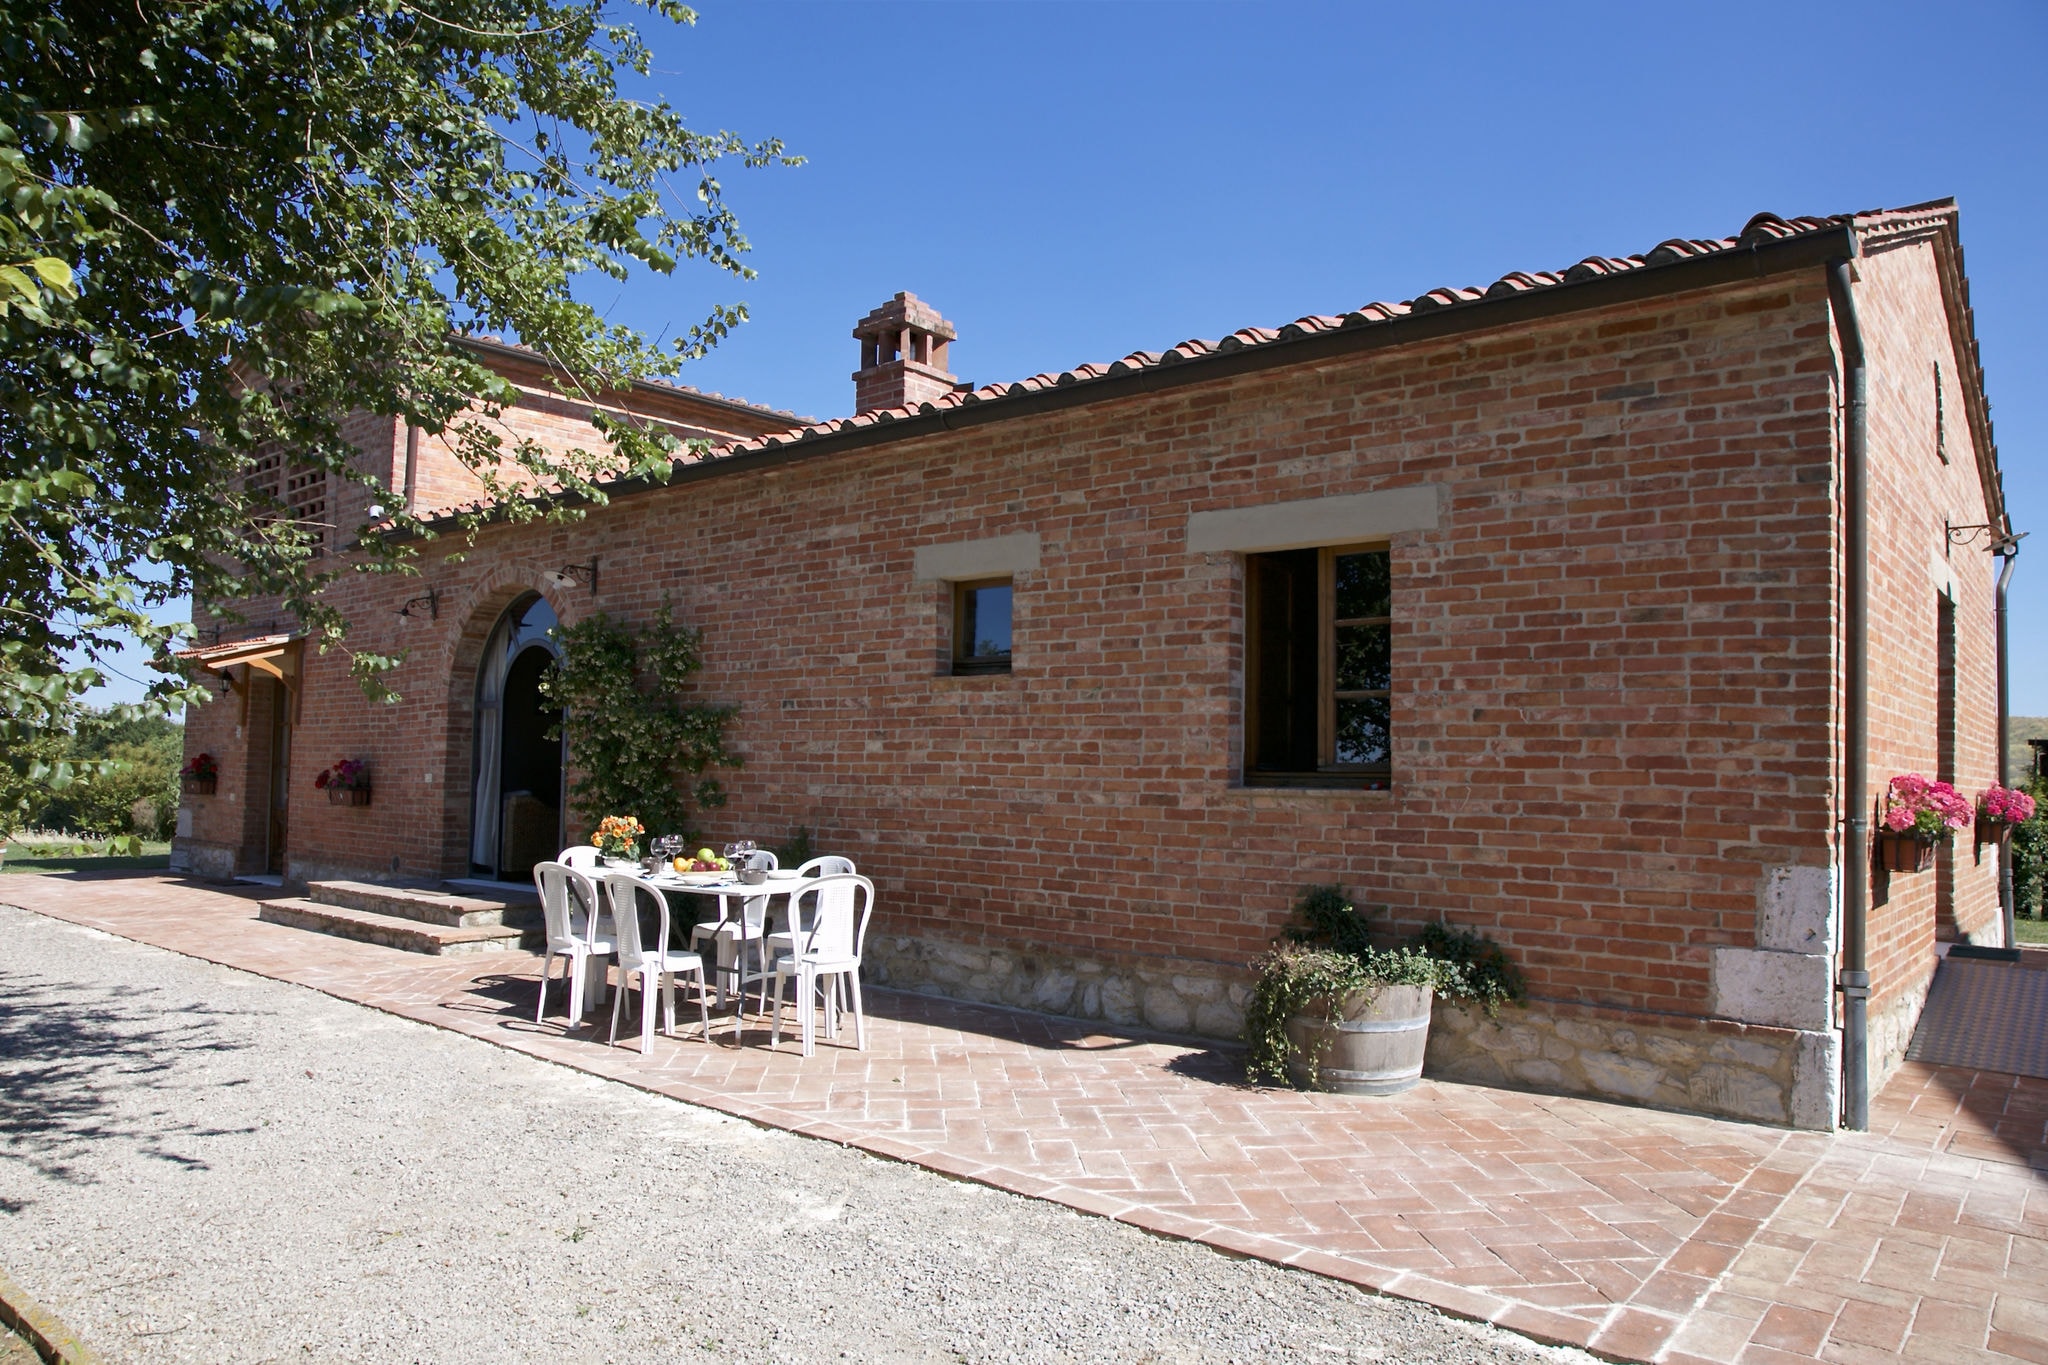 Hilltop farmhouse in Castelnuovo Berardenga Tuscany with BBQ